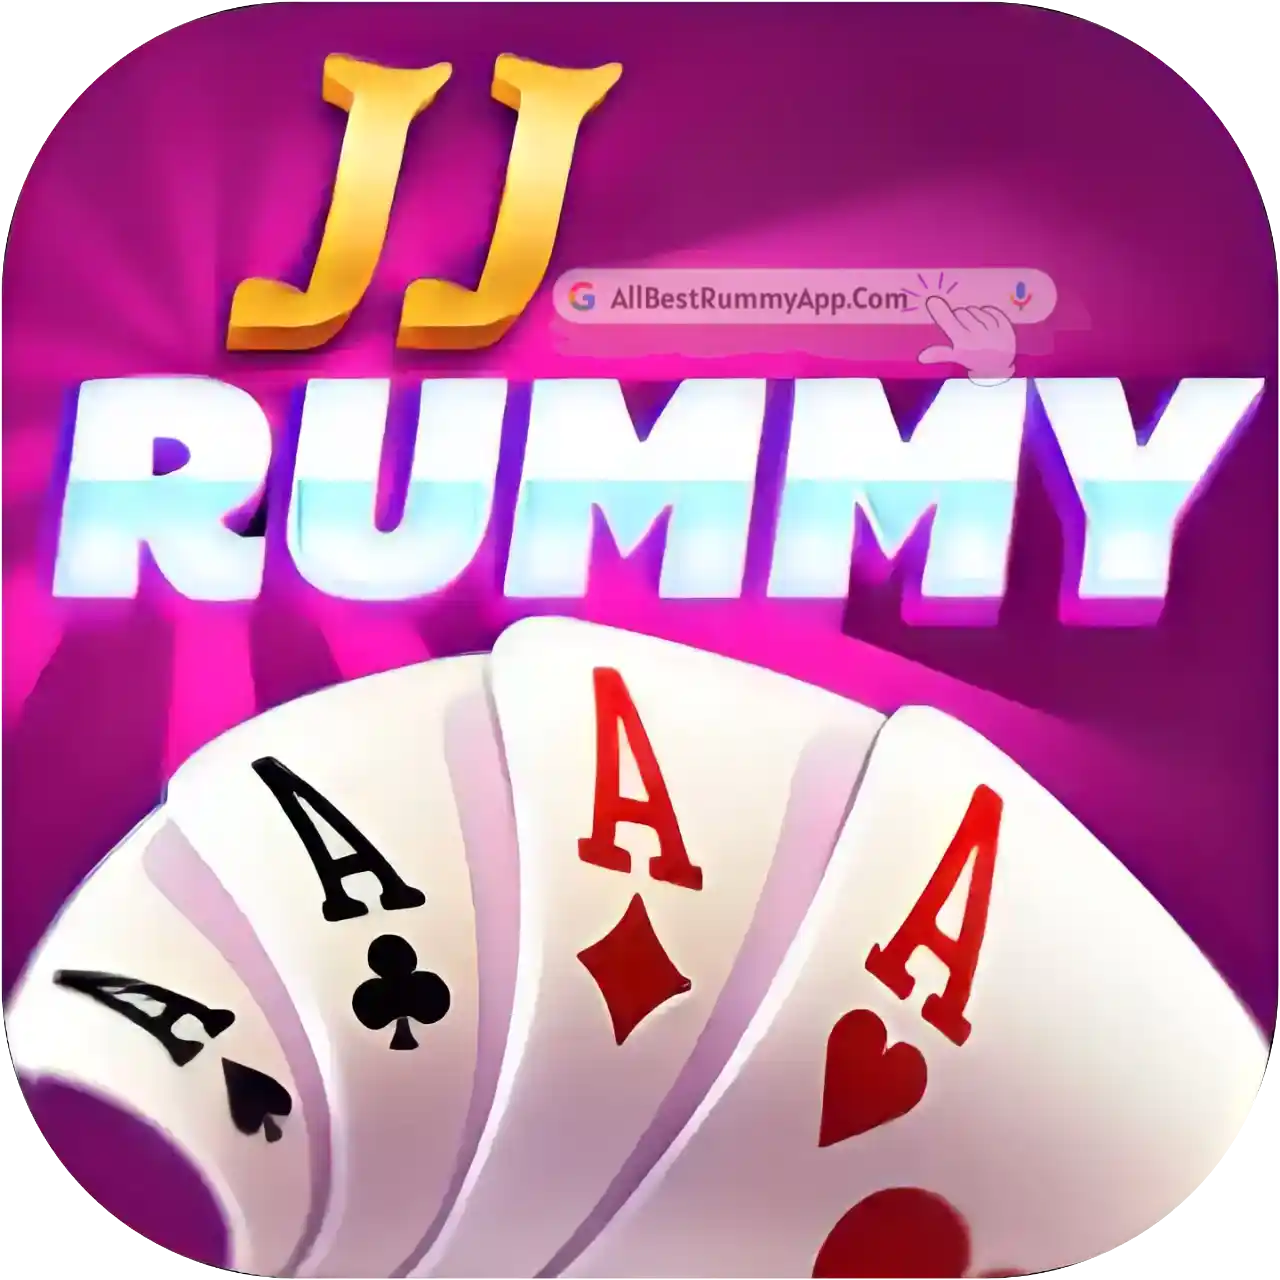 JJ Rummy APP - All Rummy App